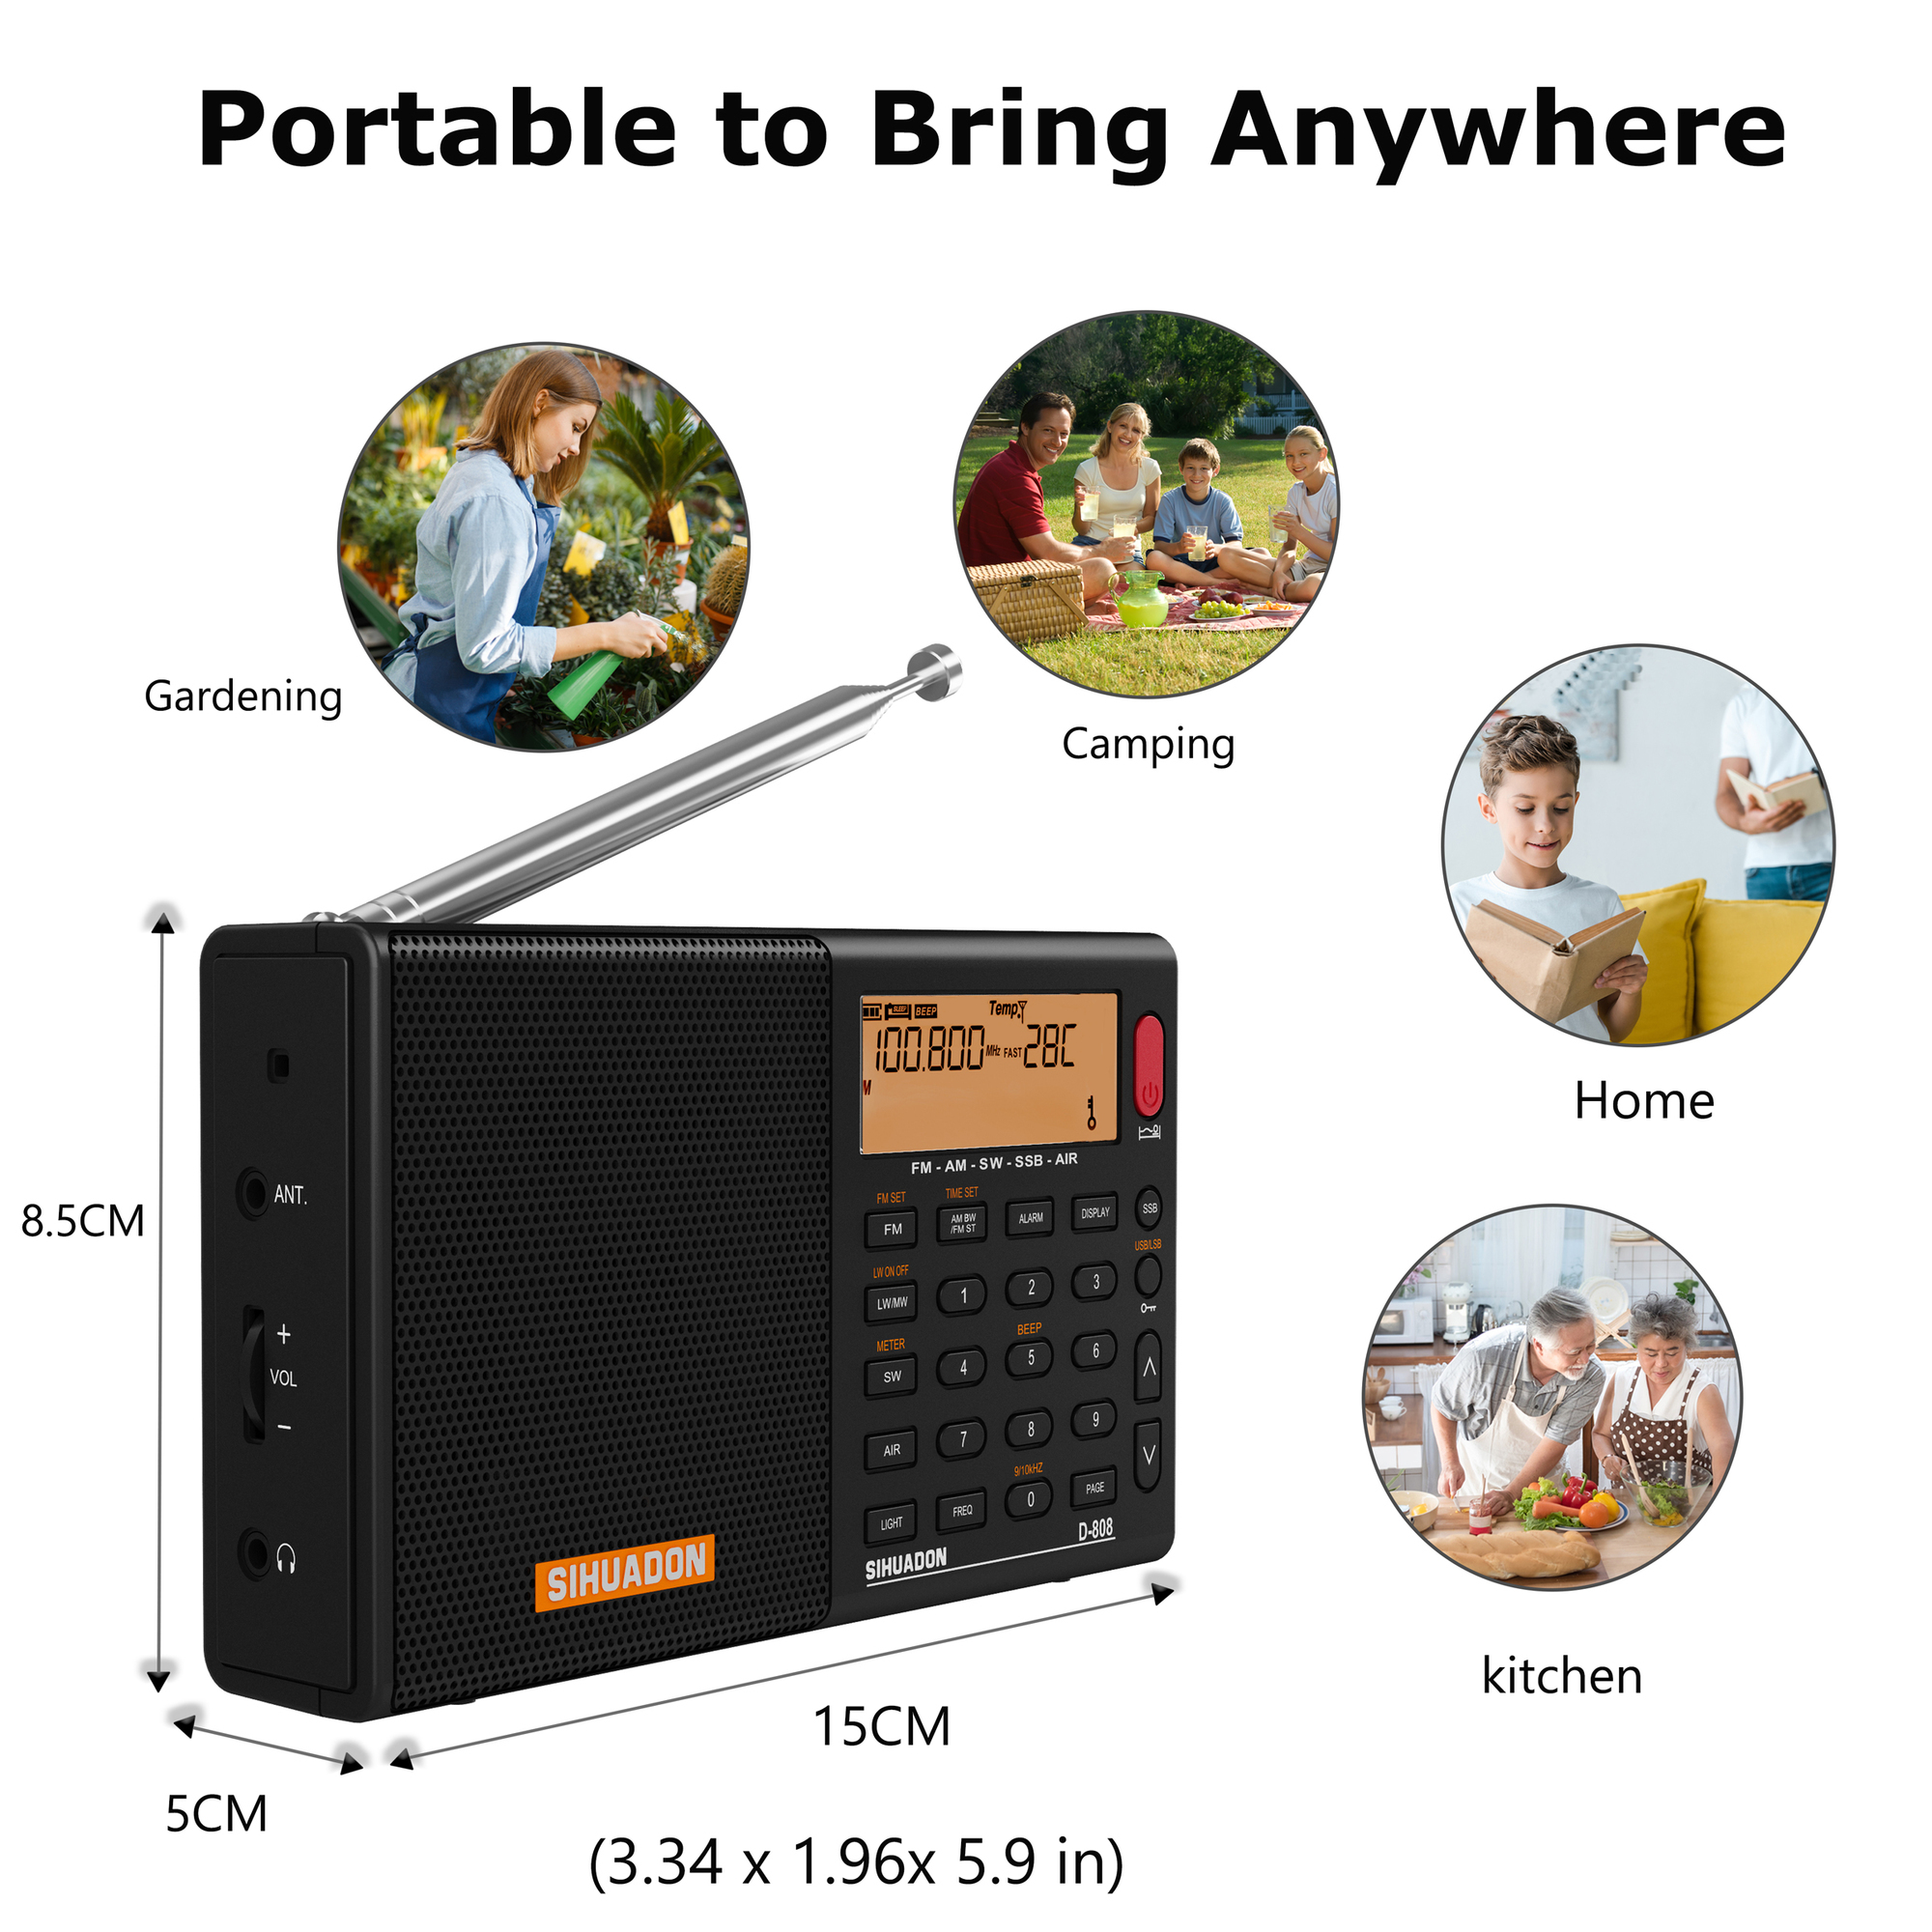 Radio Xhdata Sihuadon D-808 Portable Digital FM StereOSWMWLW SSB Air RDS-högtalare med LCD-display Alarmklocka 221025